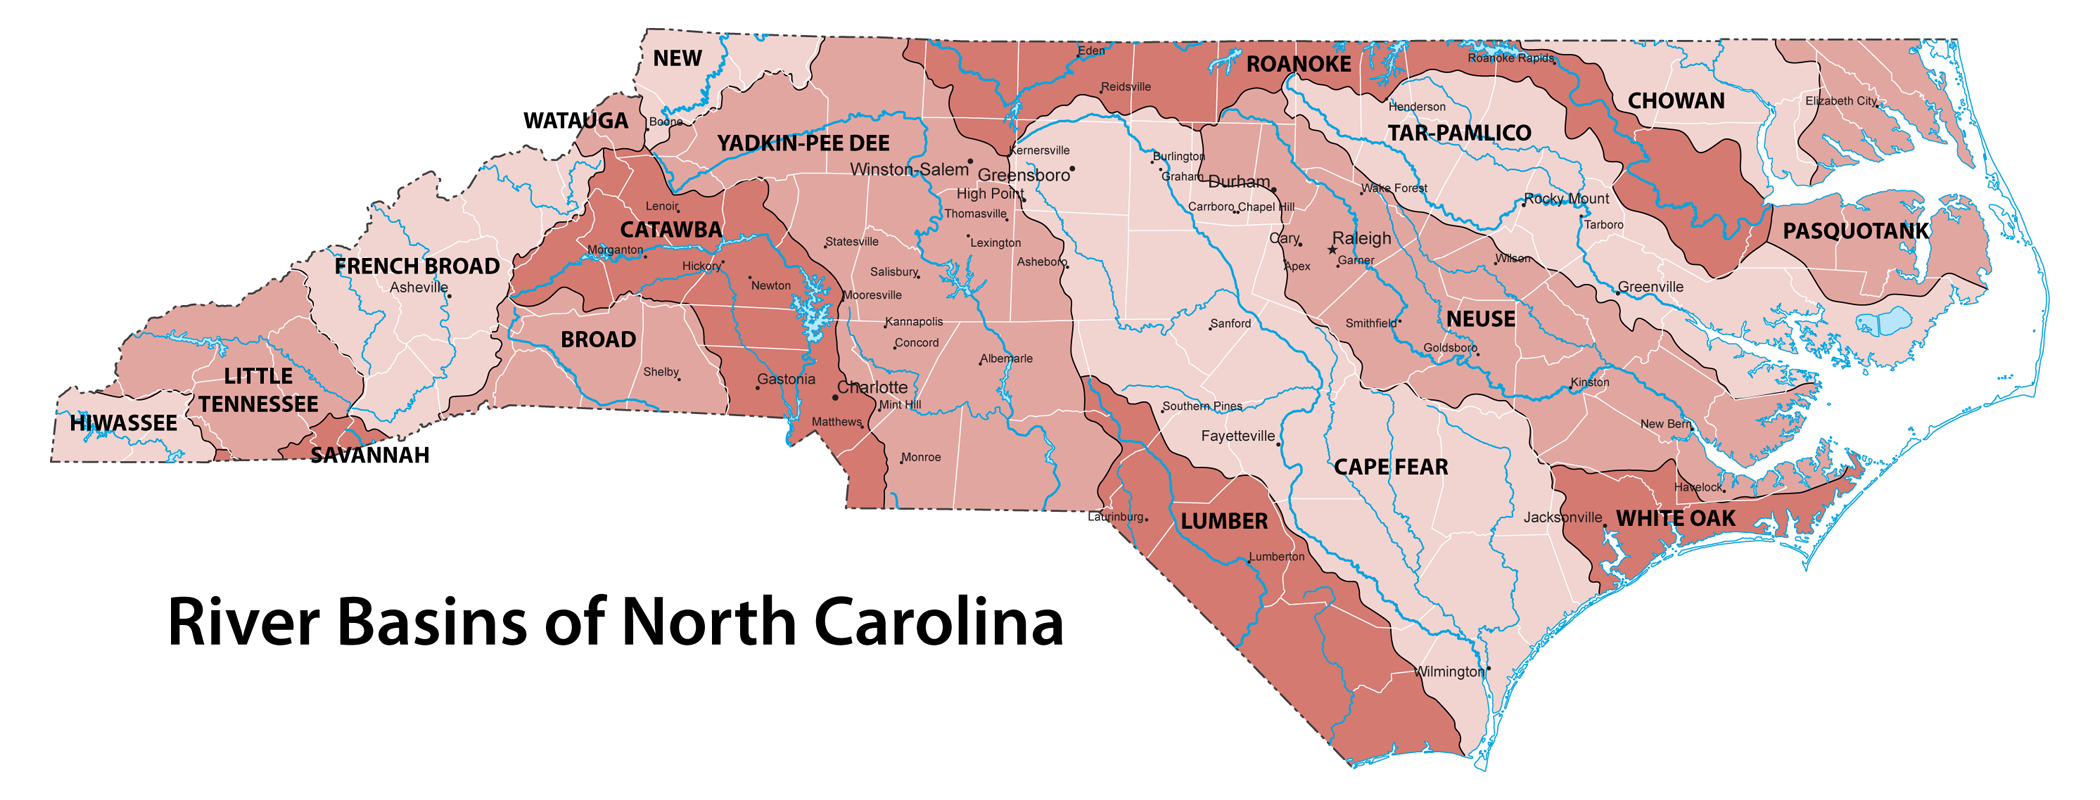 Map of rivers and basins in North Carolina.